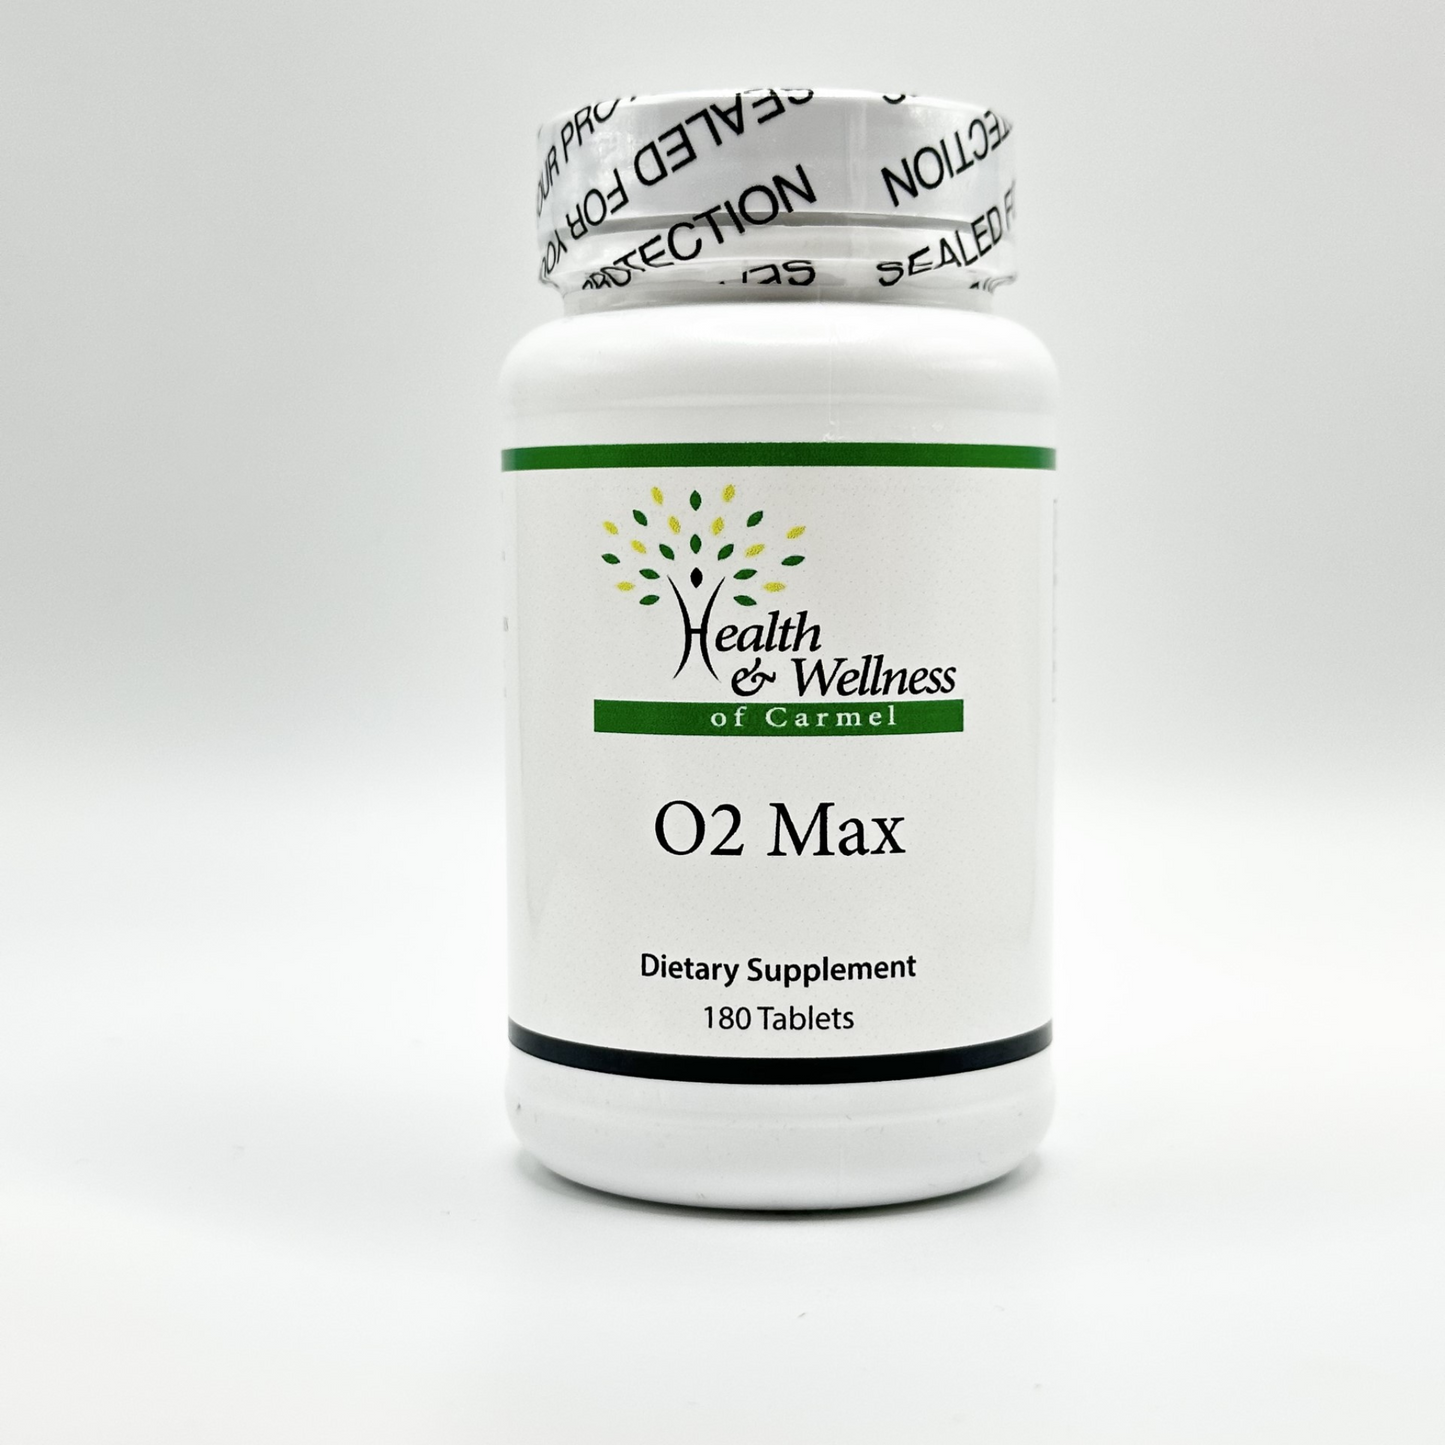 O2 Max (Oorganik-15) 180ct